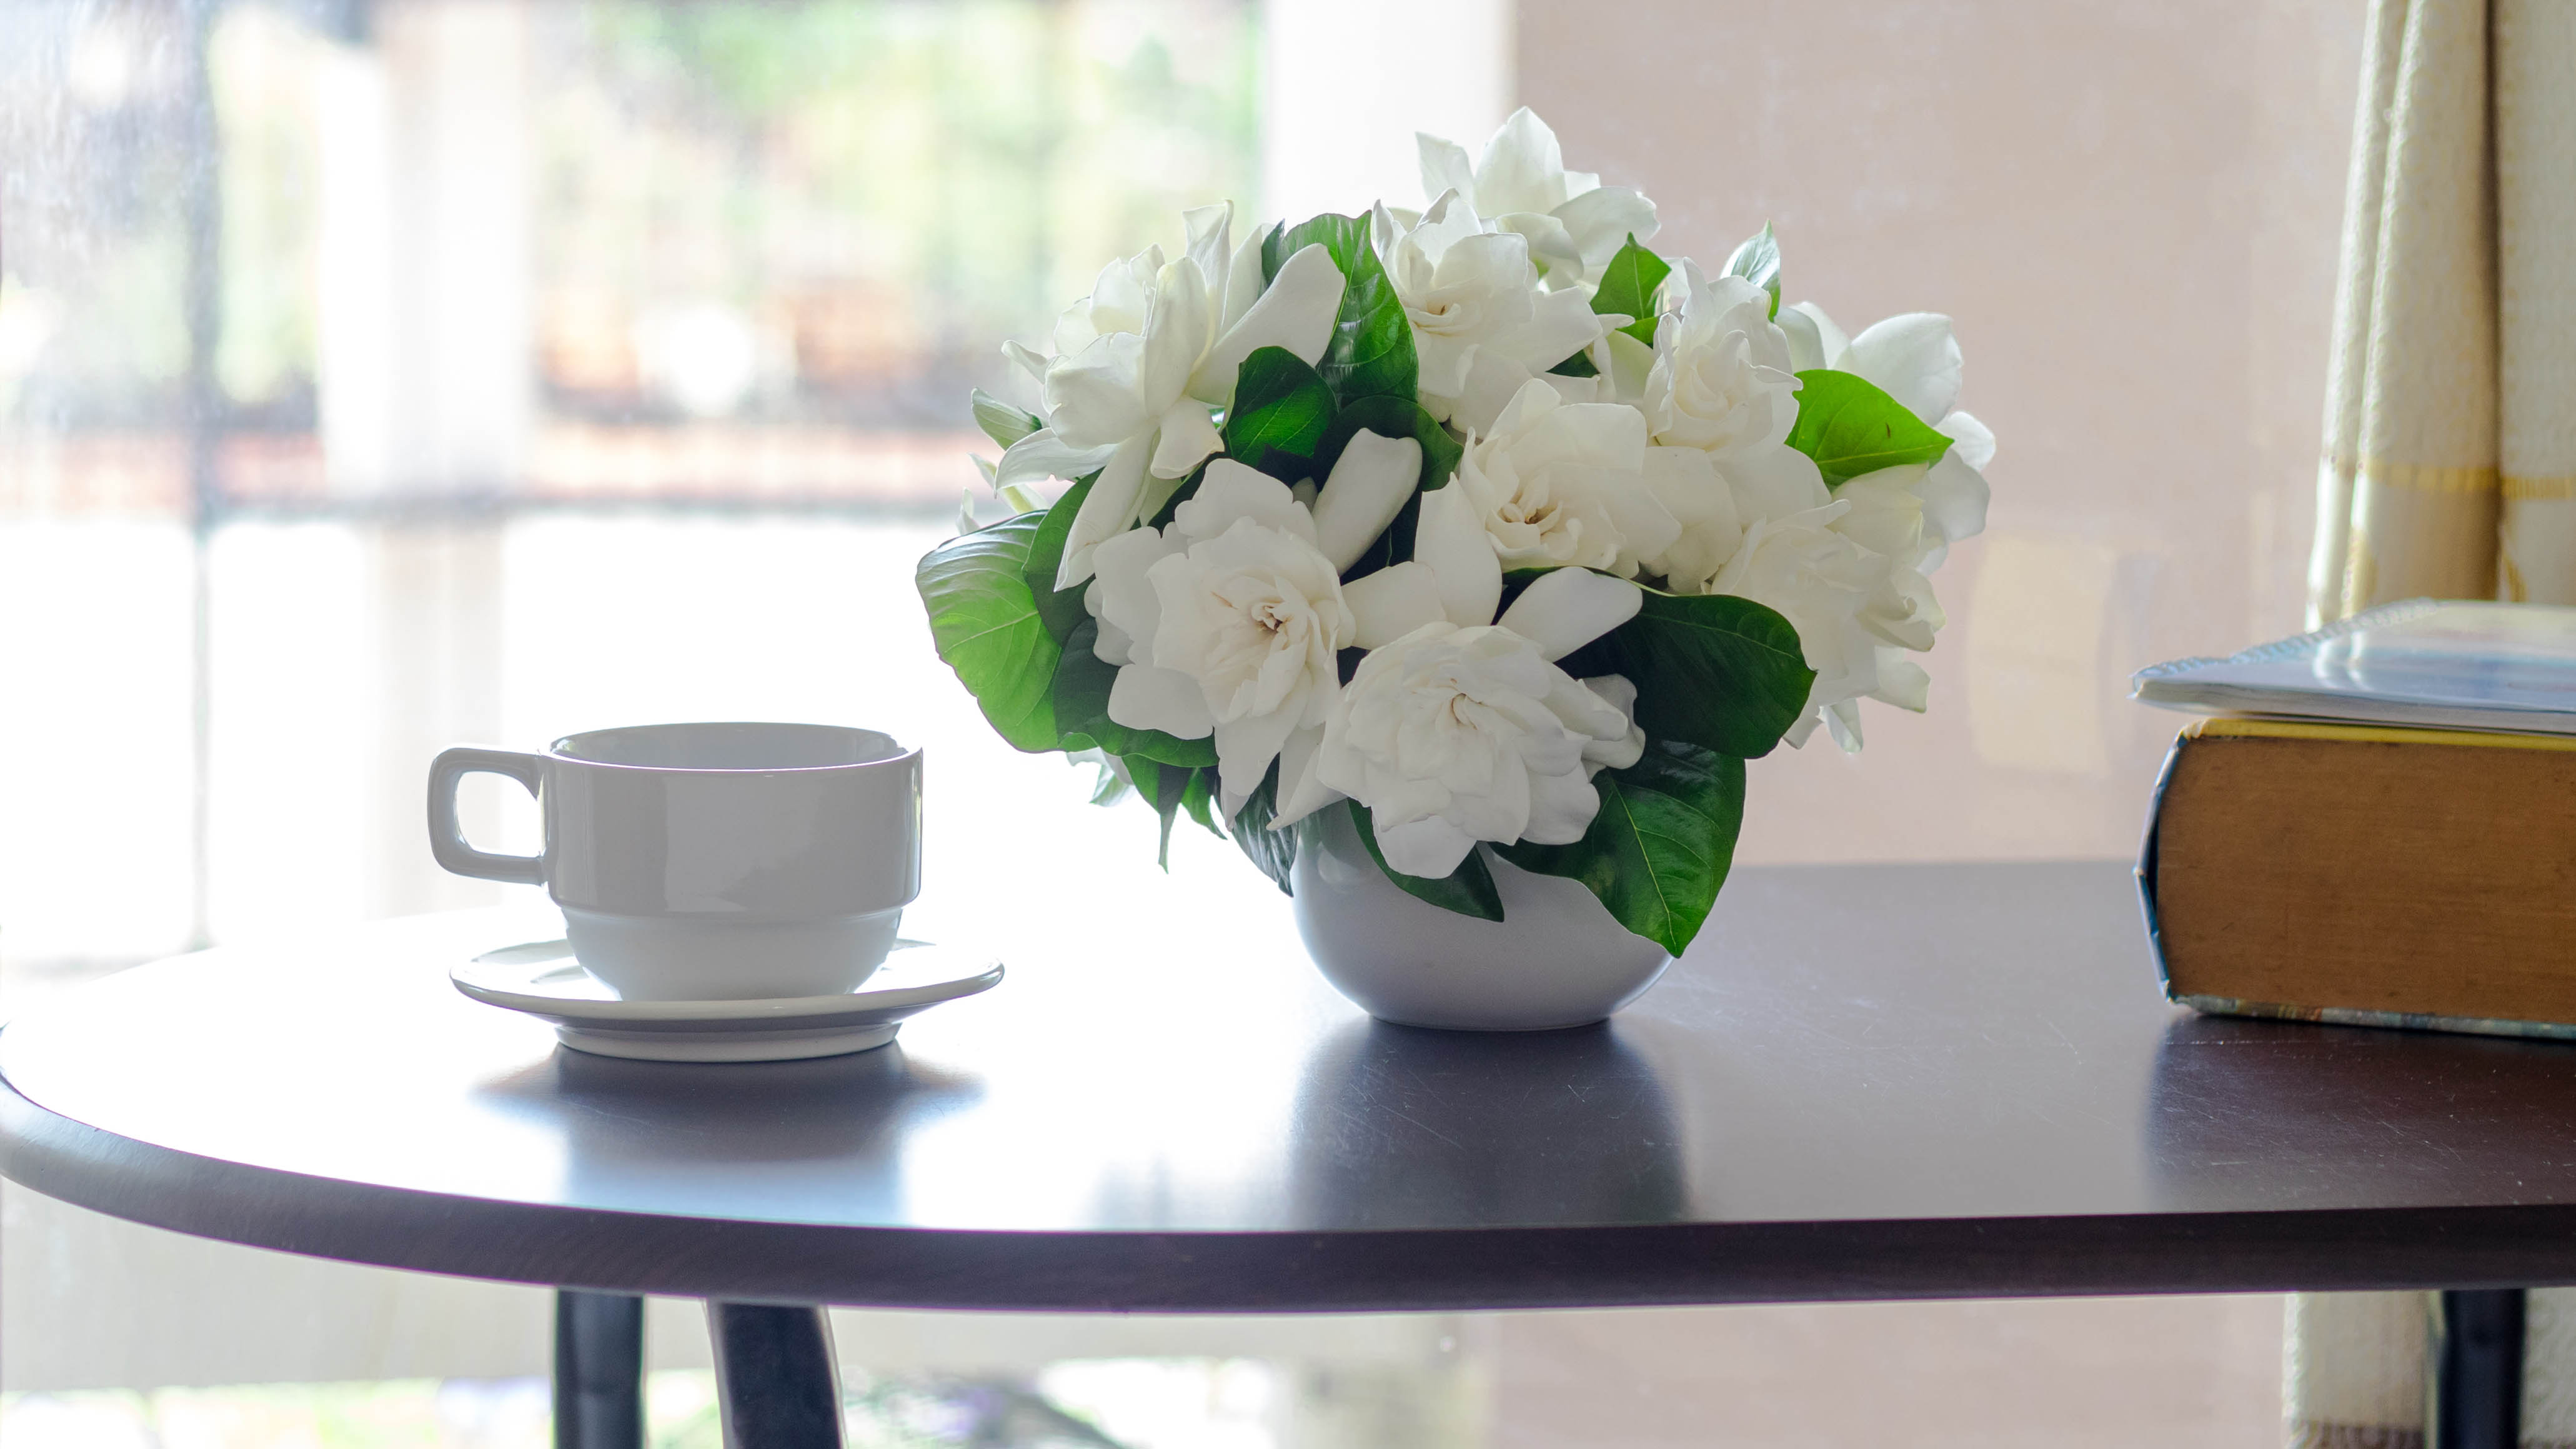 Gardenia plant in vase on table